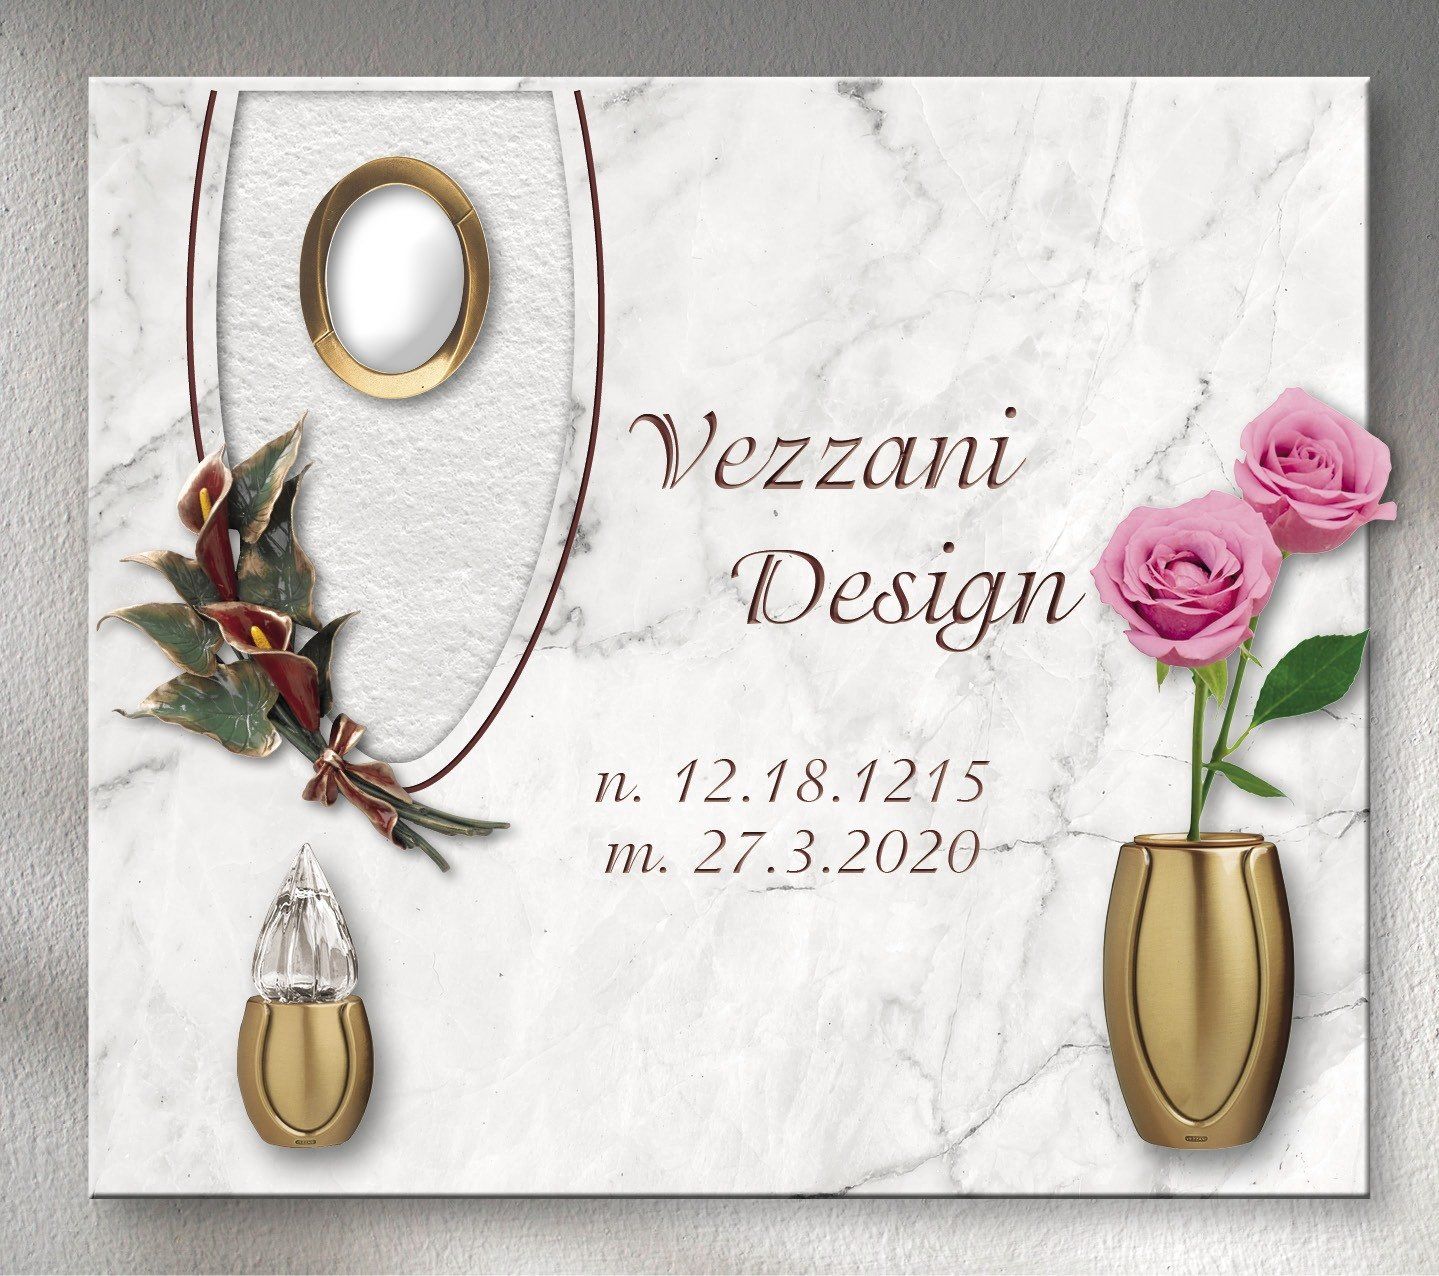 Niche with personalized engraving vezzani design 38